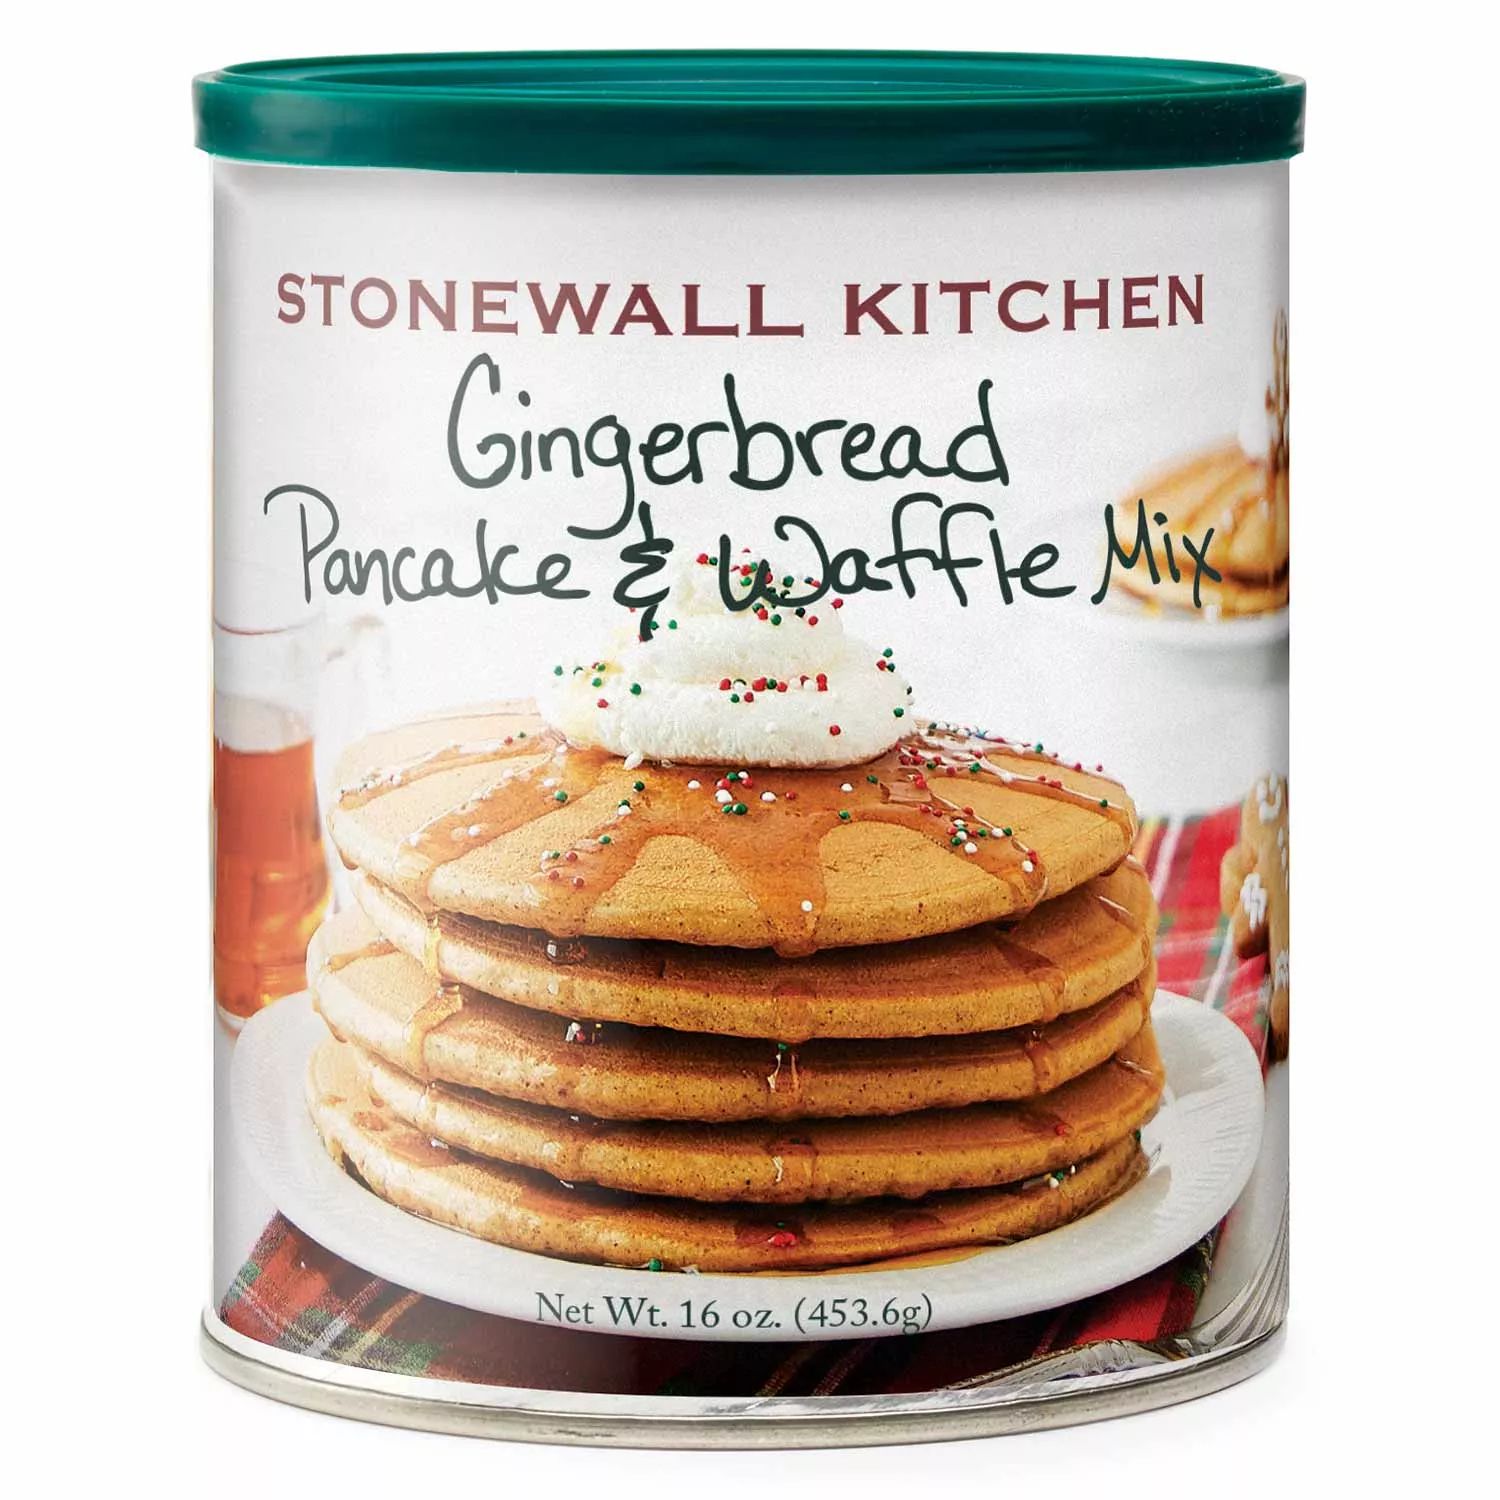 Stonewall Kitchen Gingerbread Pancake & Waffle Mix | Sur La Table | Sur La Table